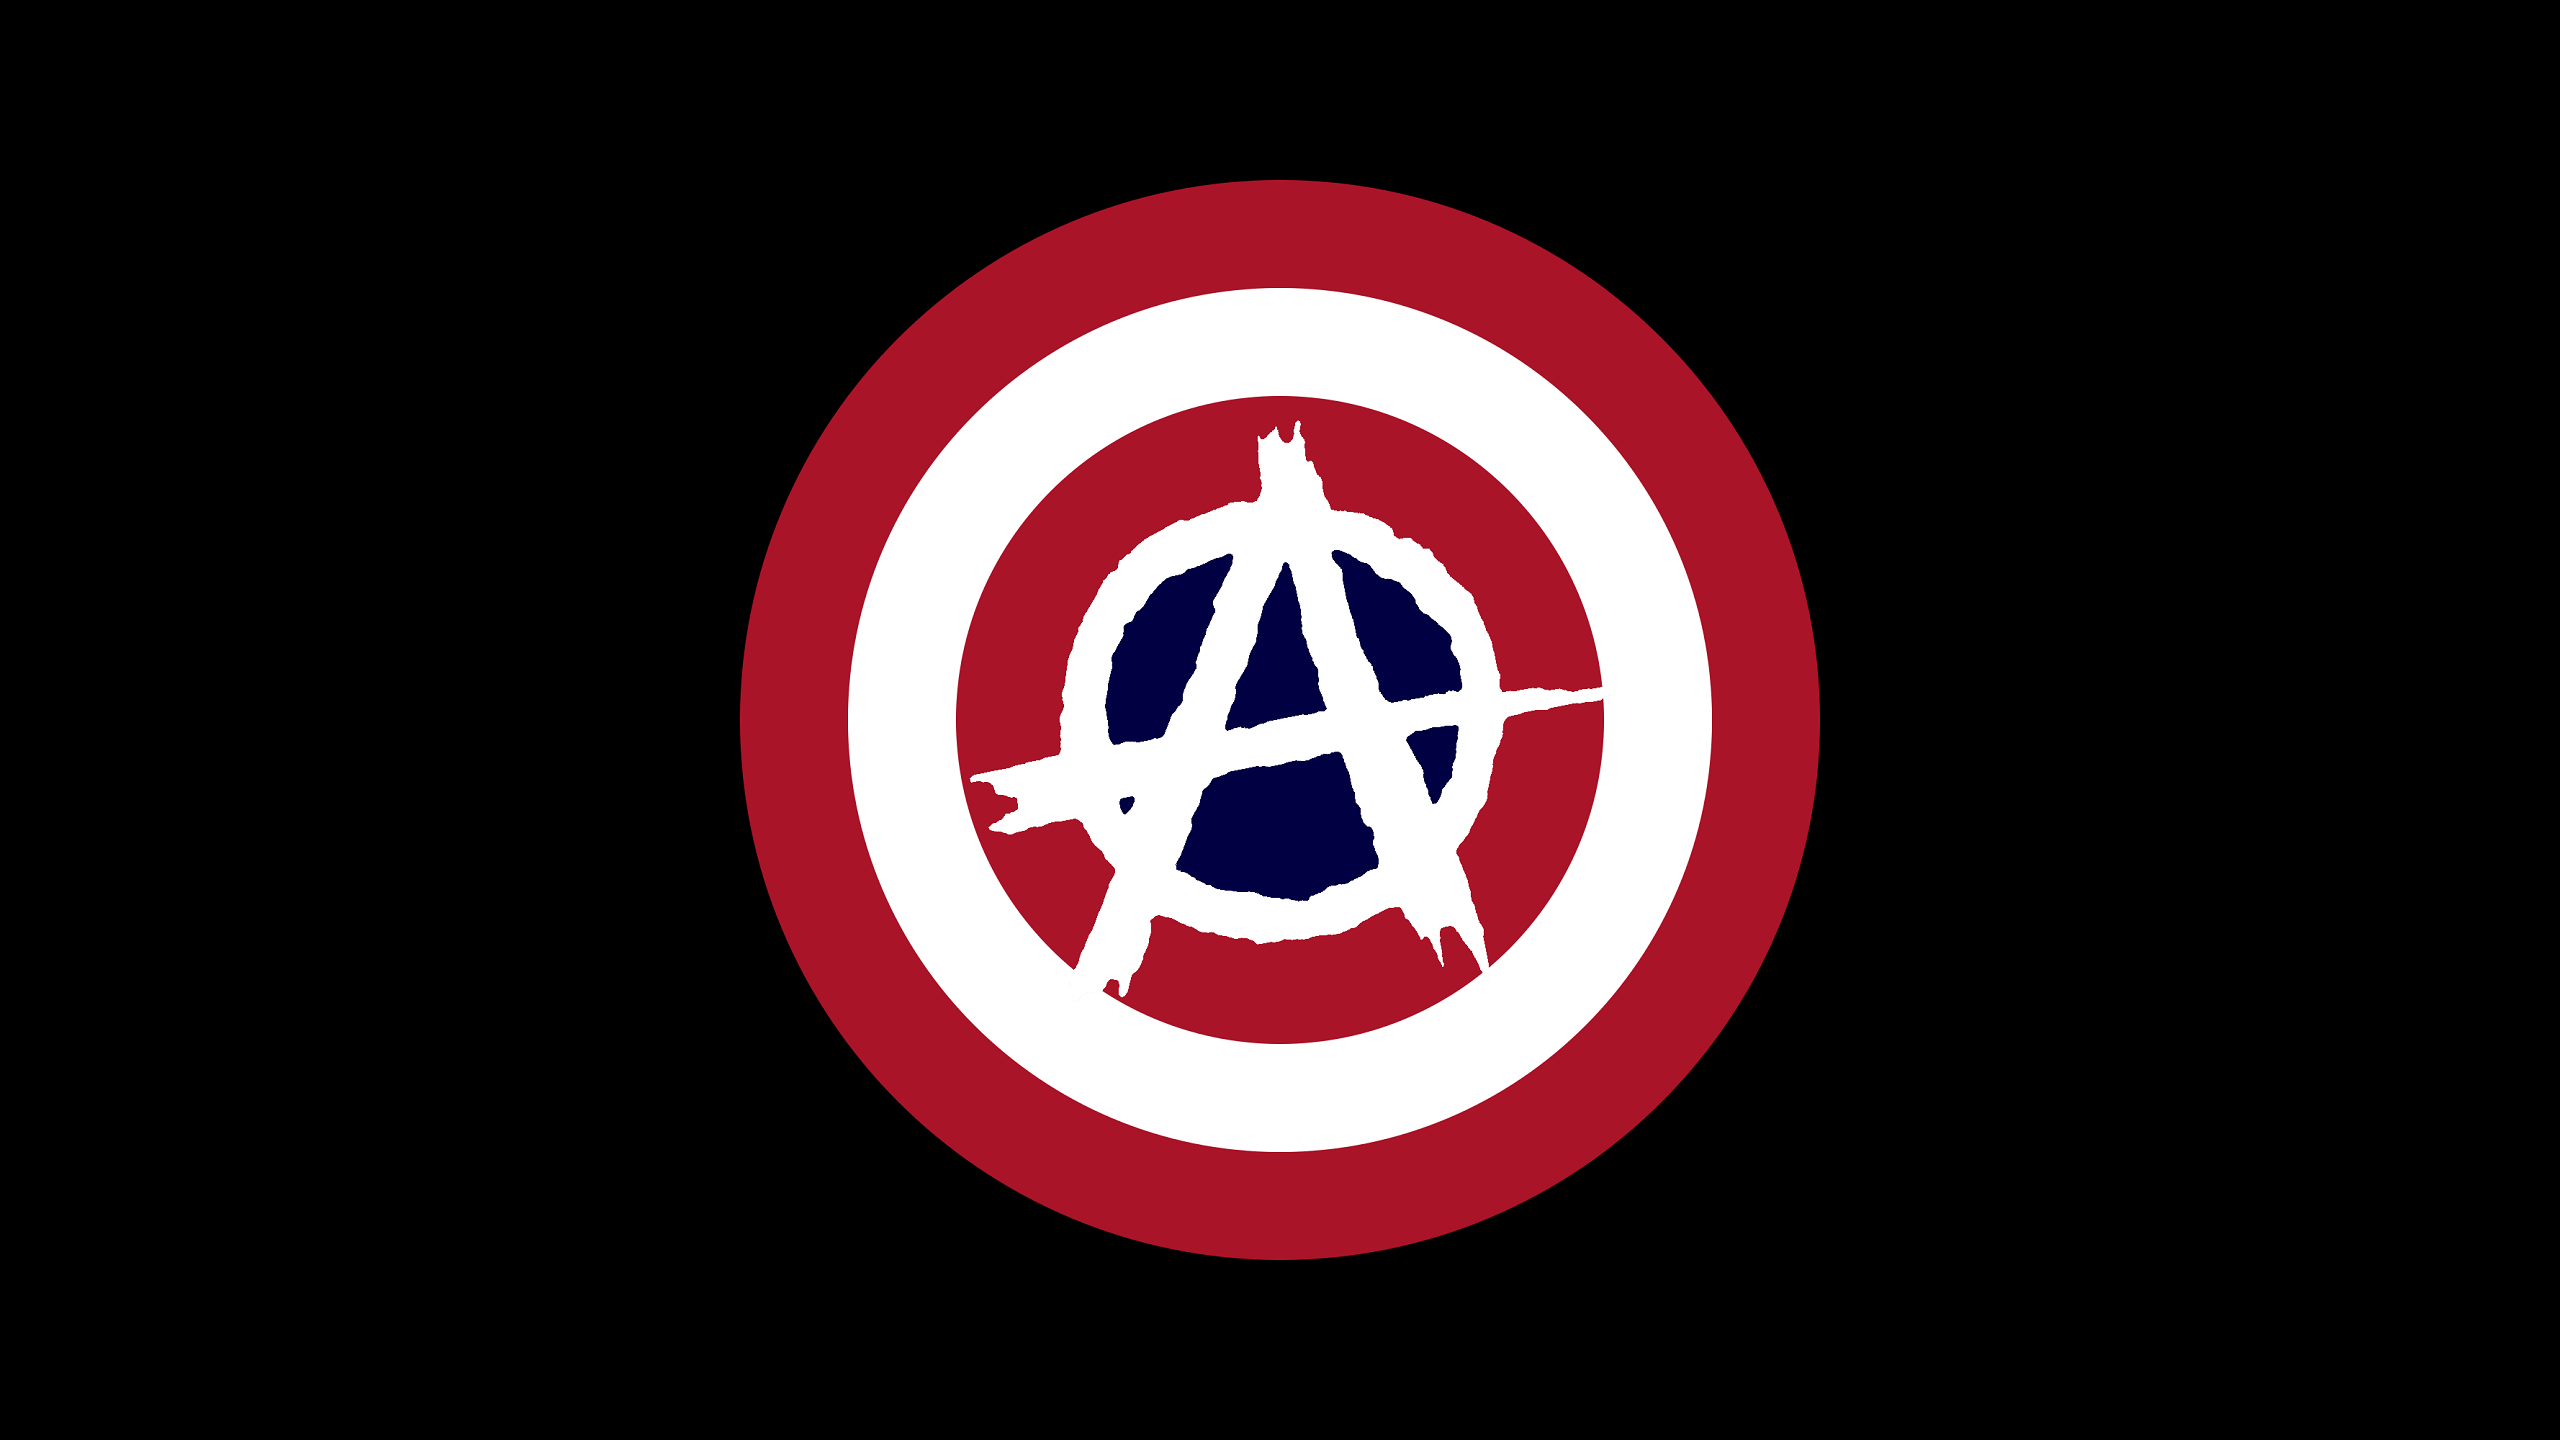 General 2560x1440 Marvel Comics Captain America Anarchy  shield black background black red digital art simple background